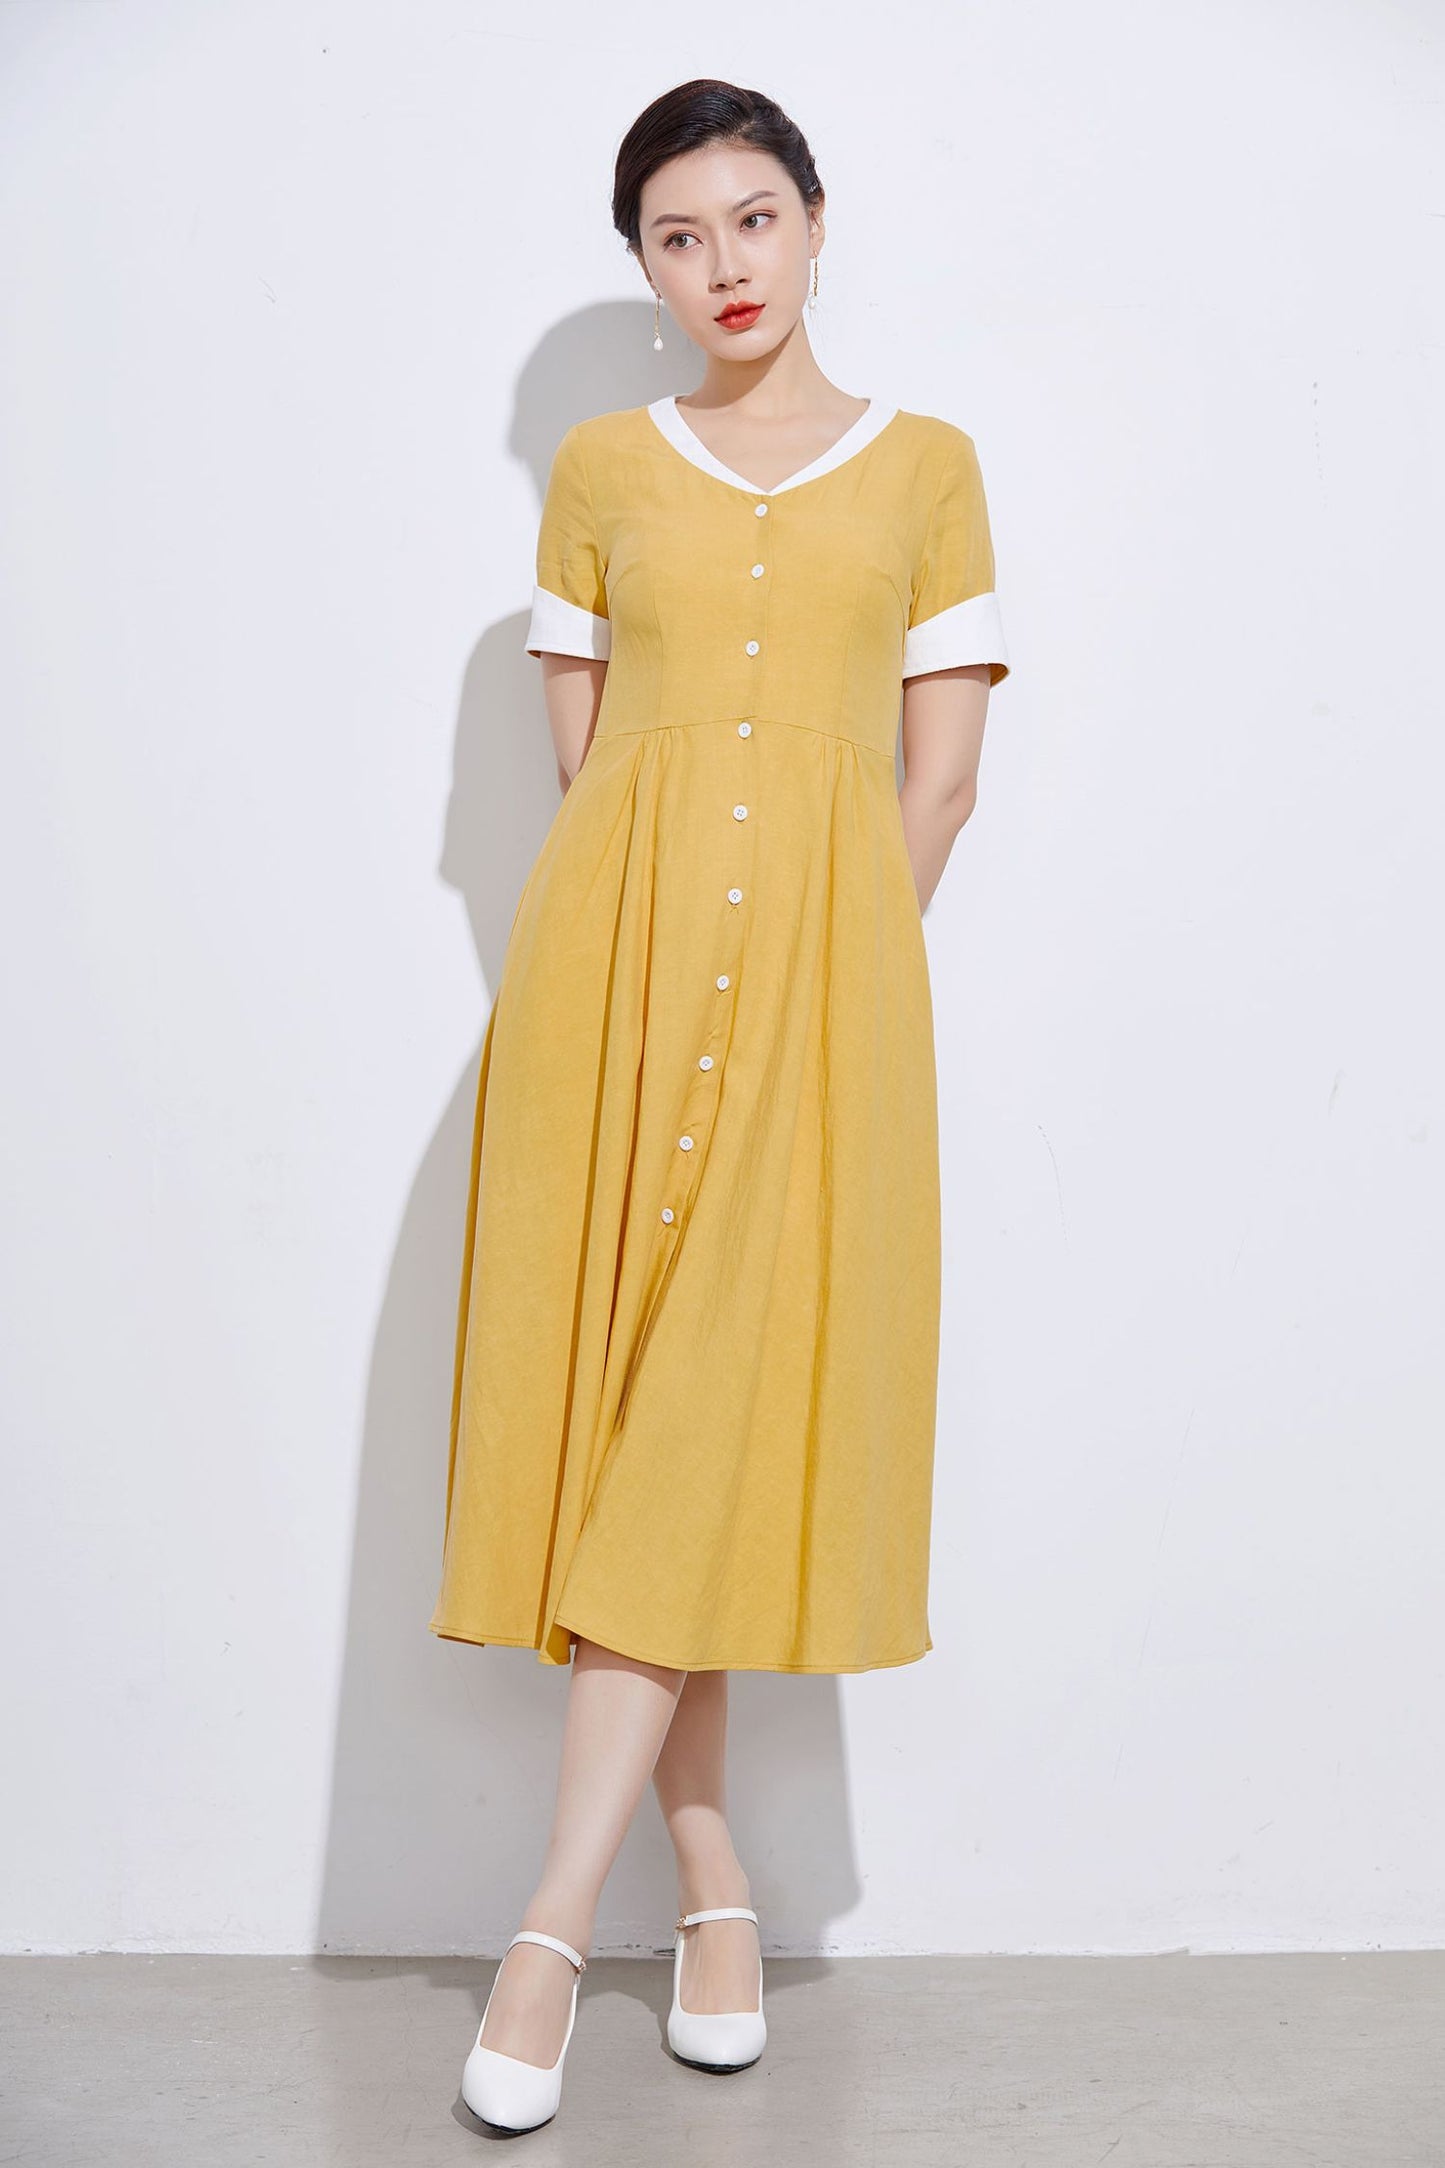 vintage inspired Yellow linen shirt dress 2317